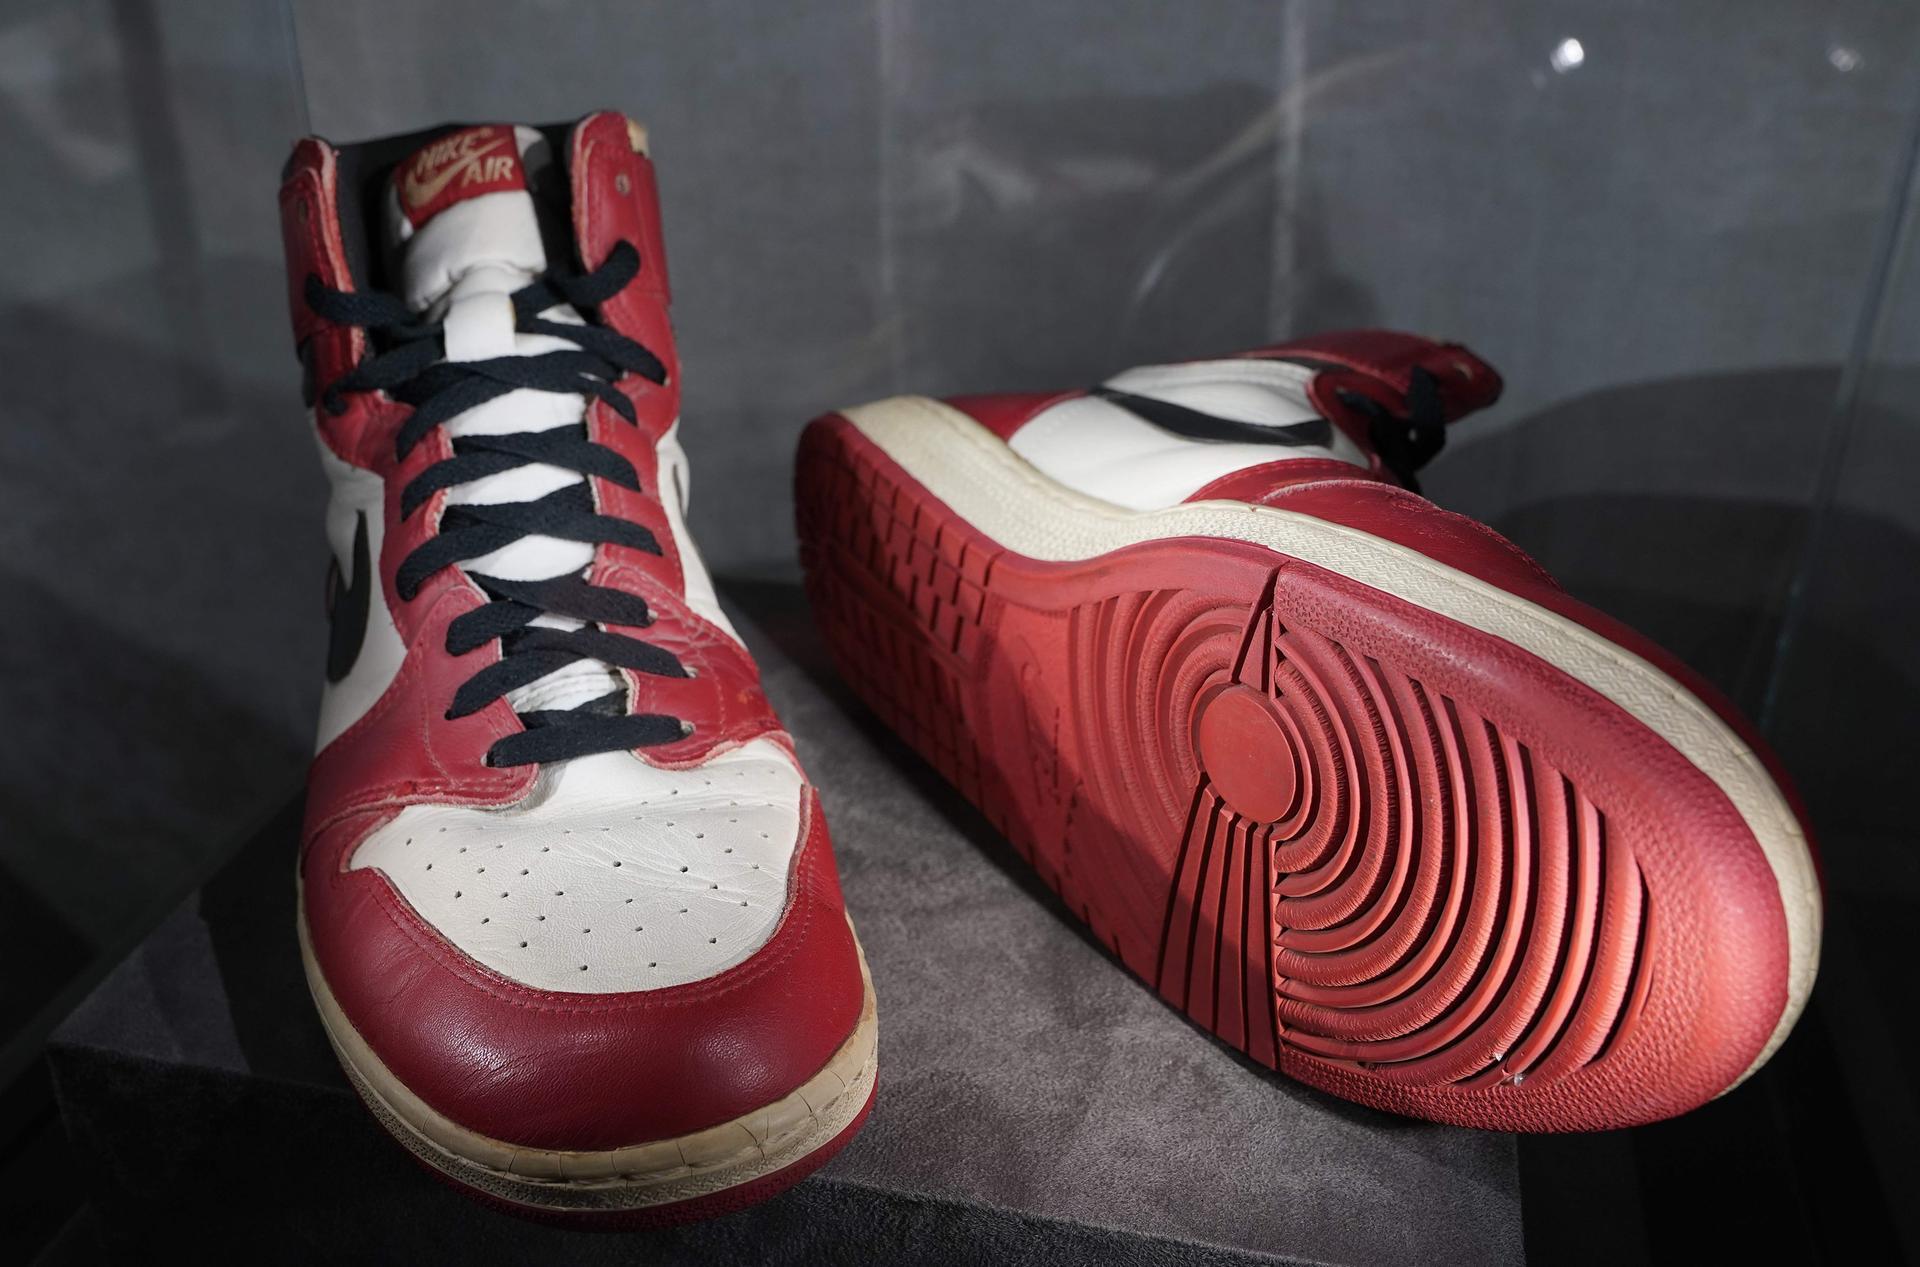 Michael Jordan UNC jersey auctioned for $1.38 million - Los Angeles Times